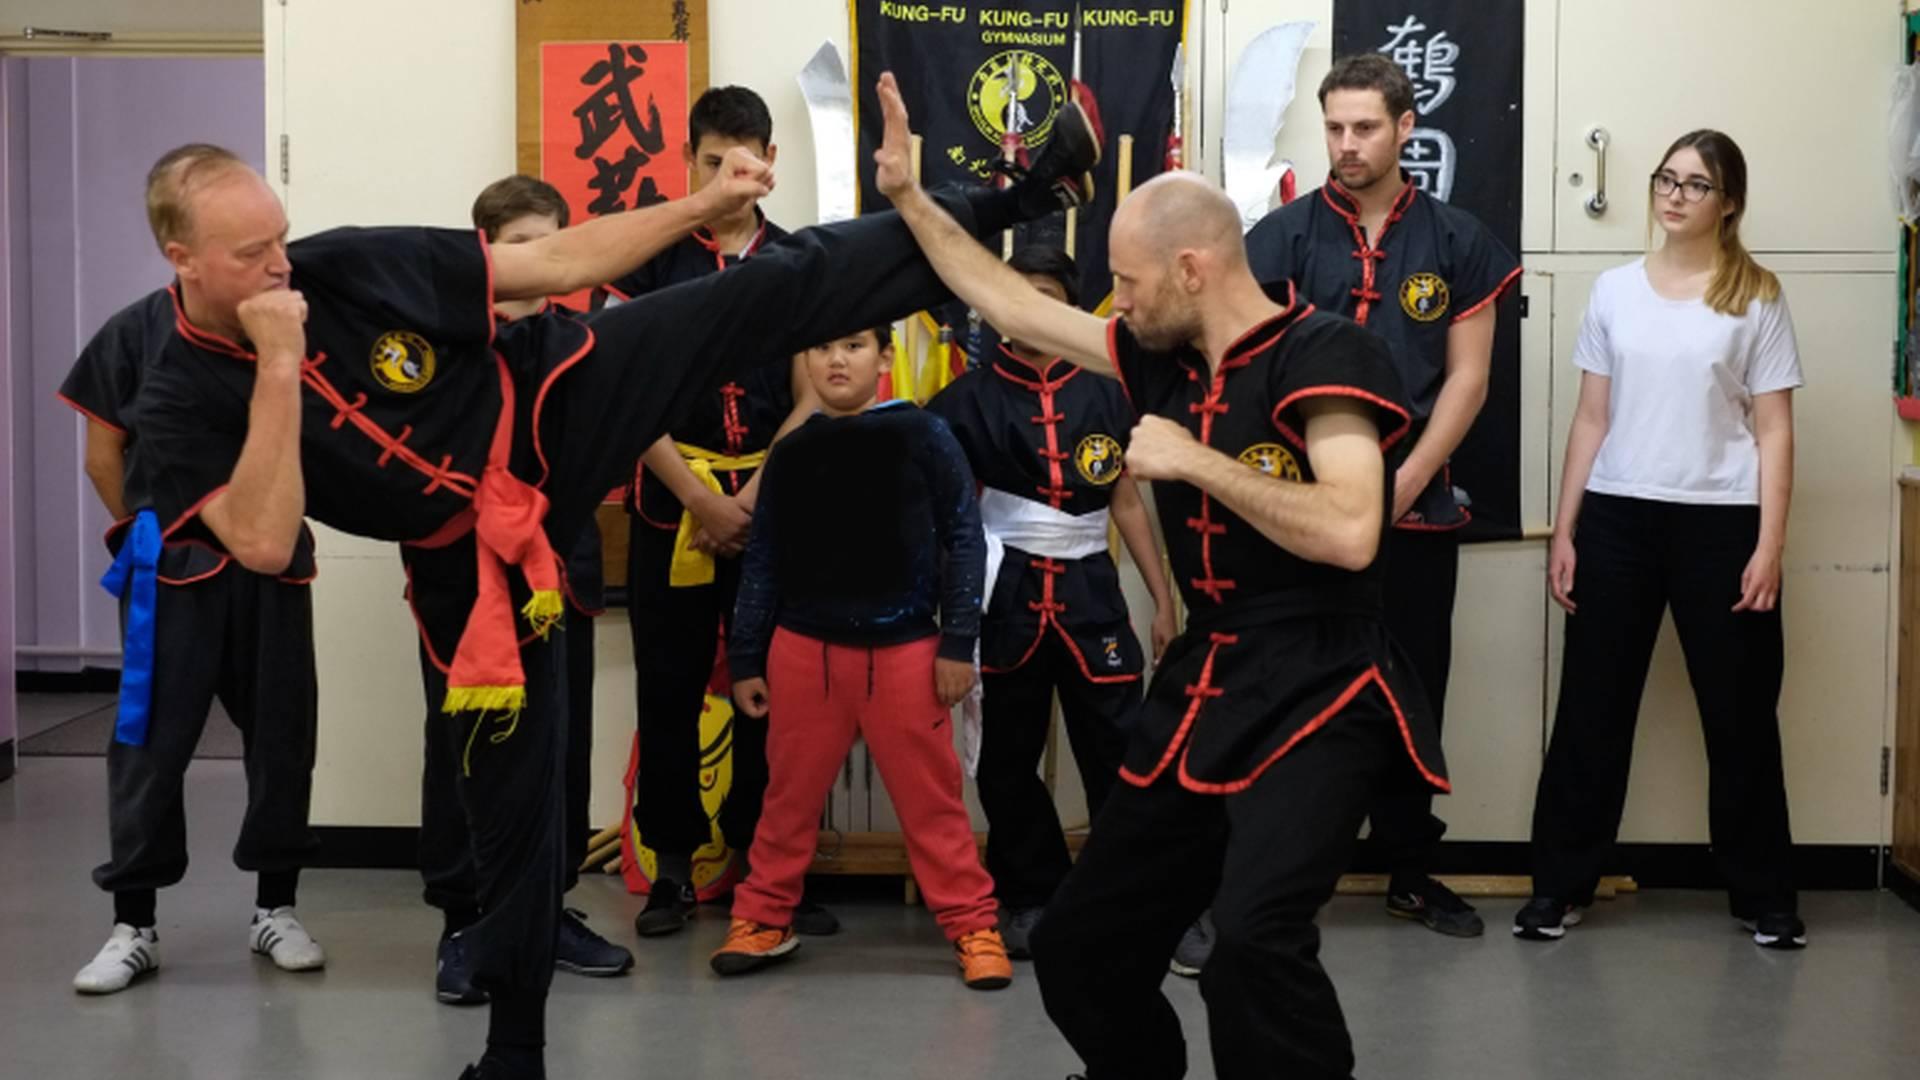 Shaolin Gym Kung Fu photo